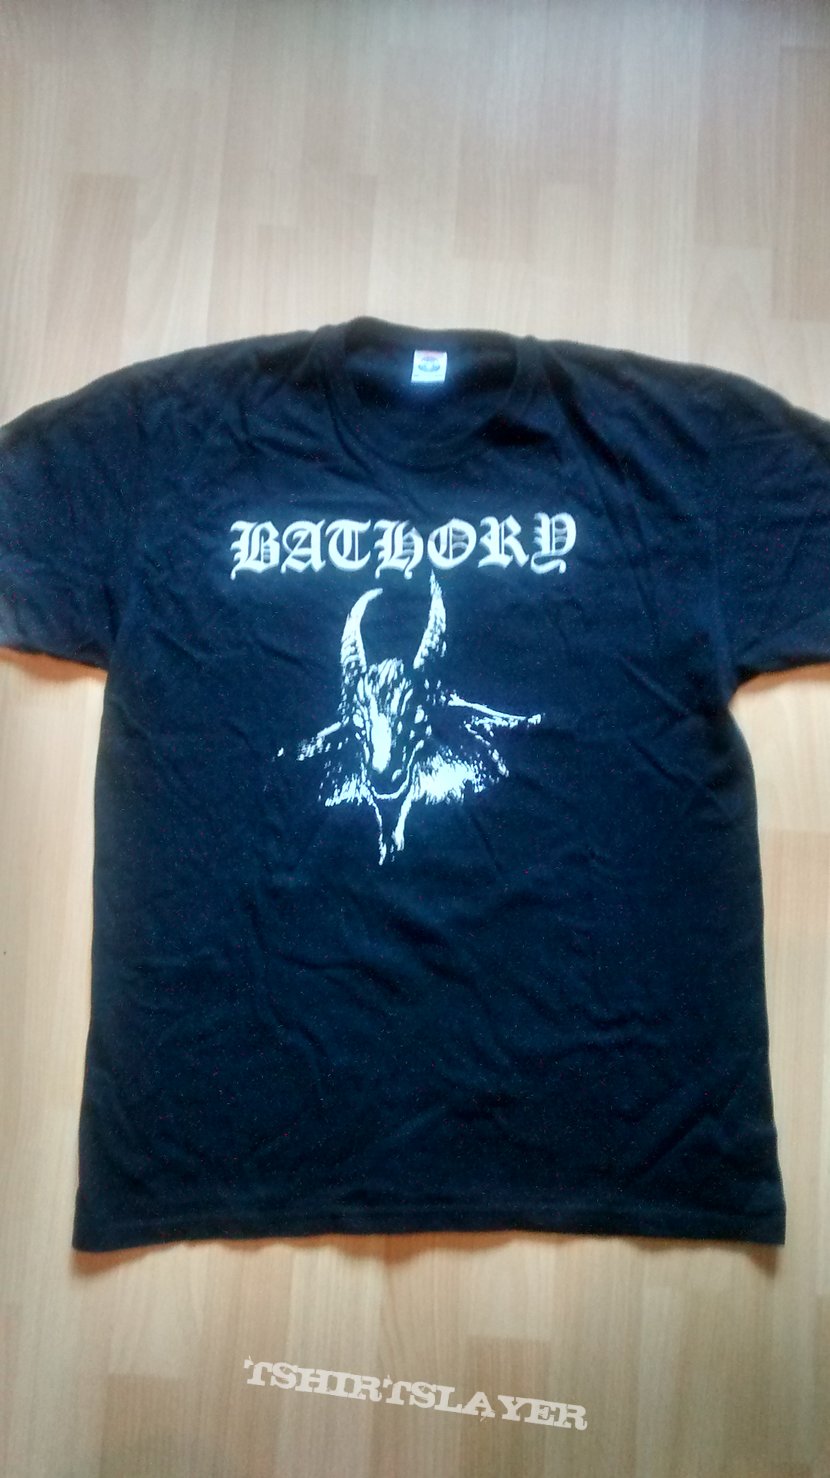 Bathory - Goat Shirt